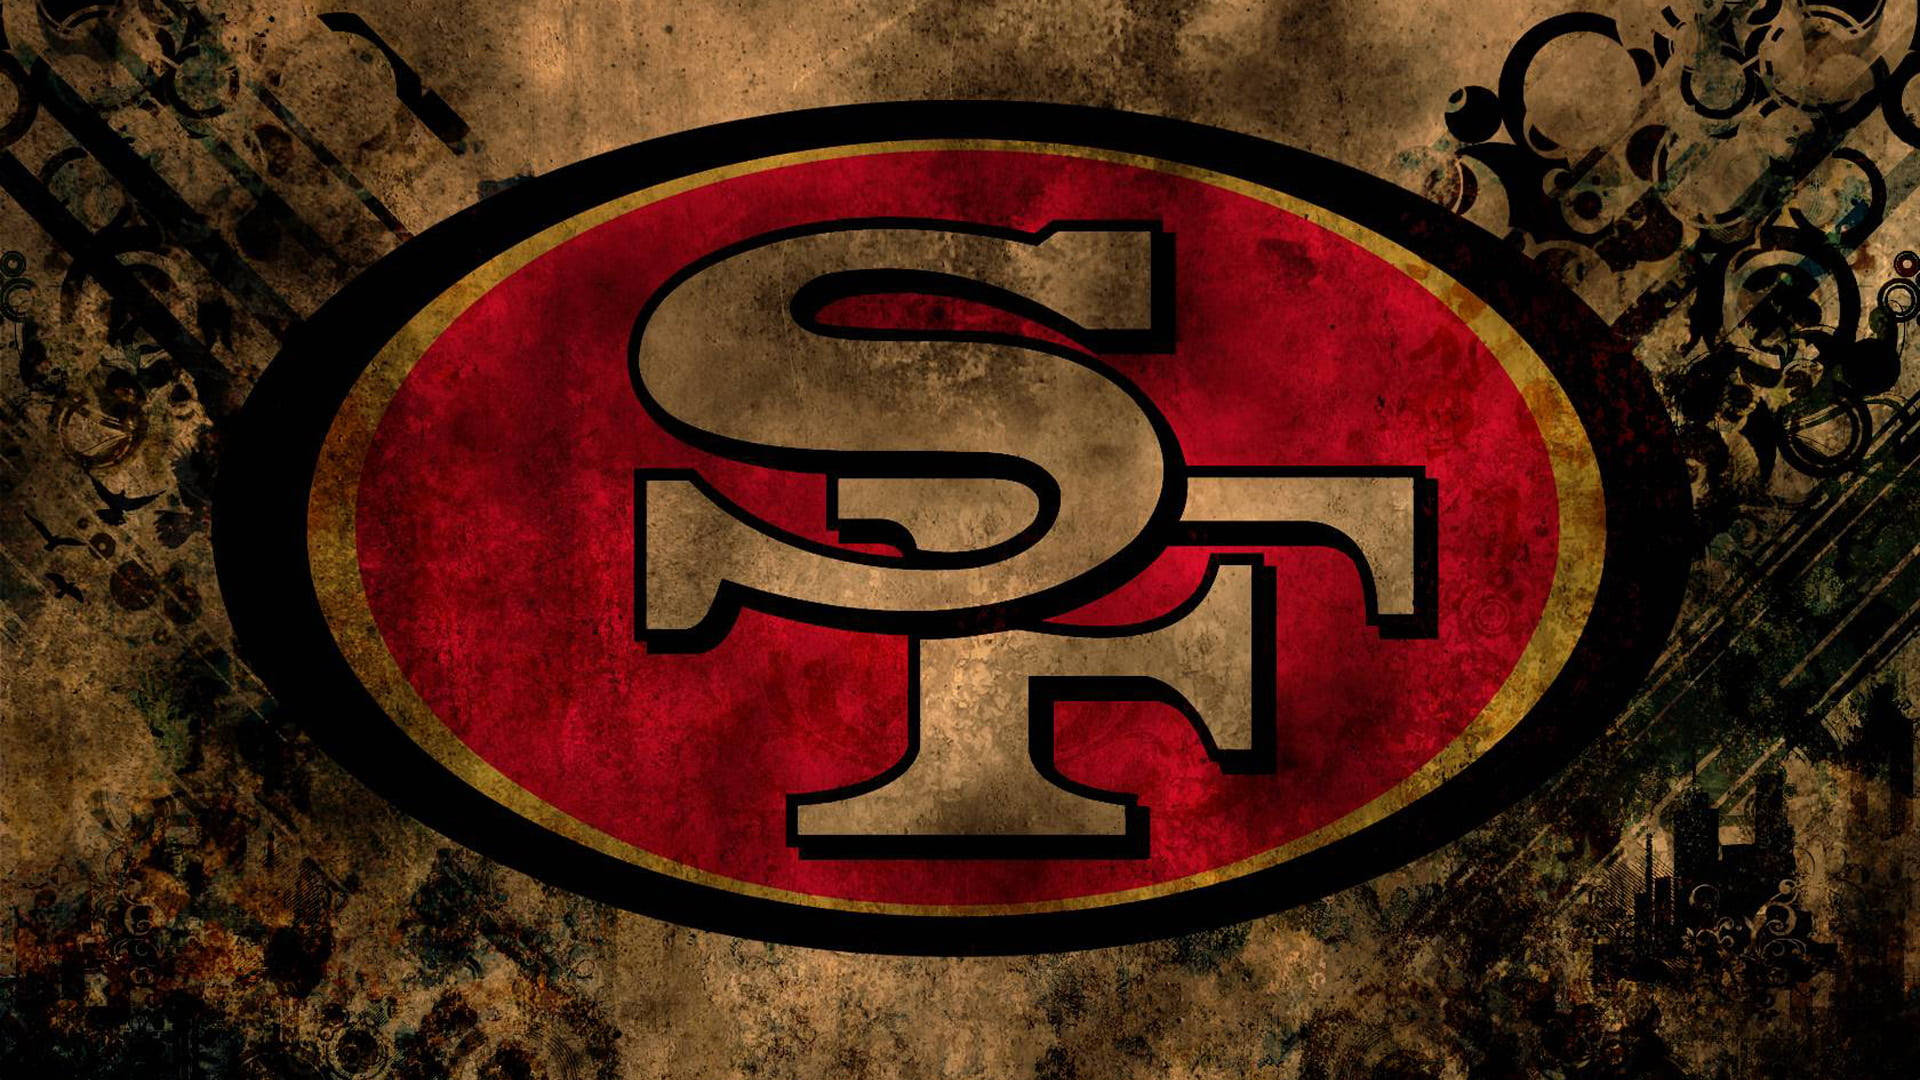 Sf Logo Dirty Wall 49ers Iphone Wallpaper